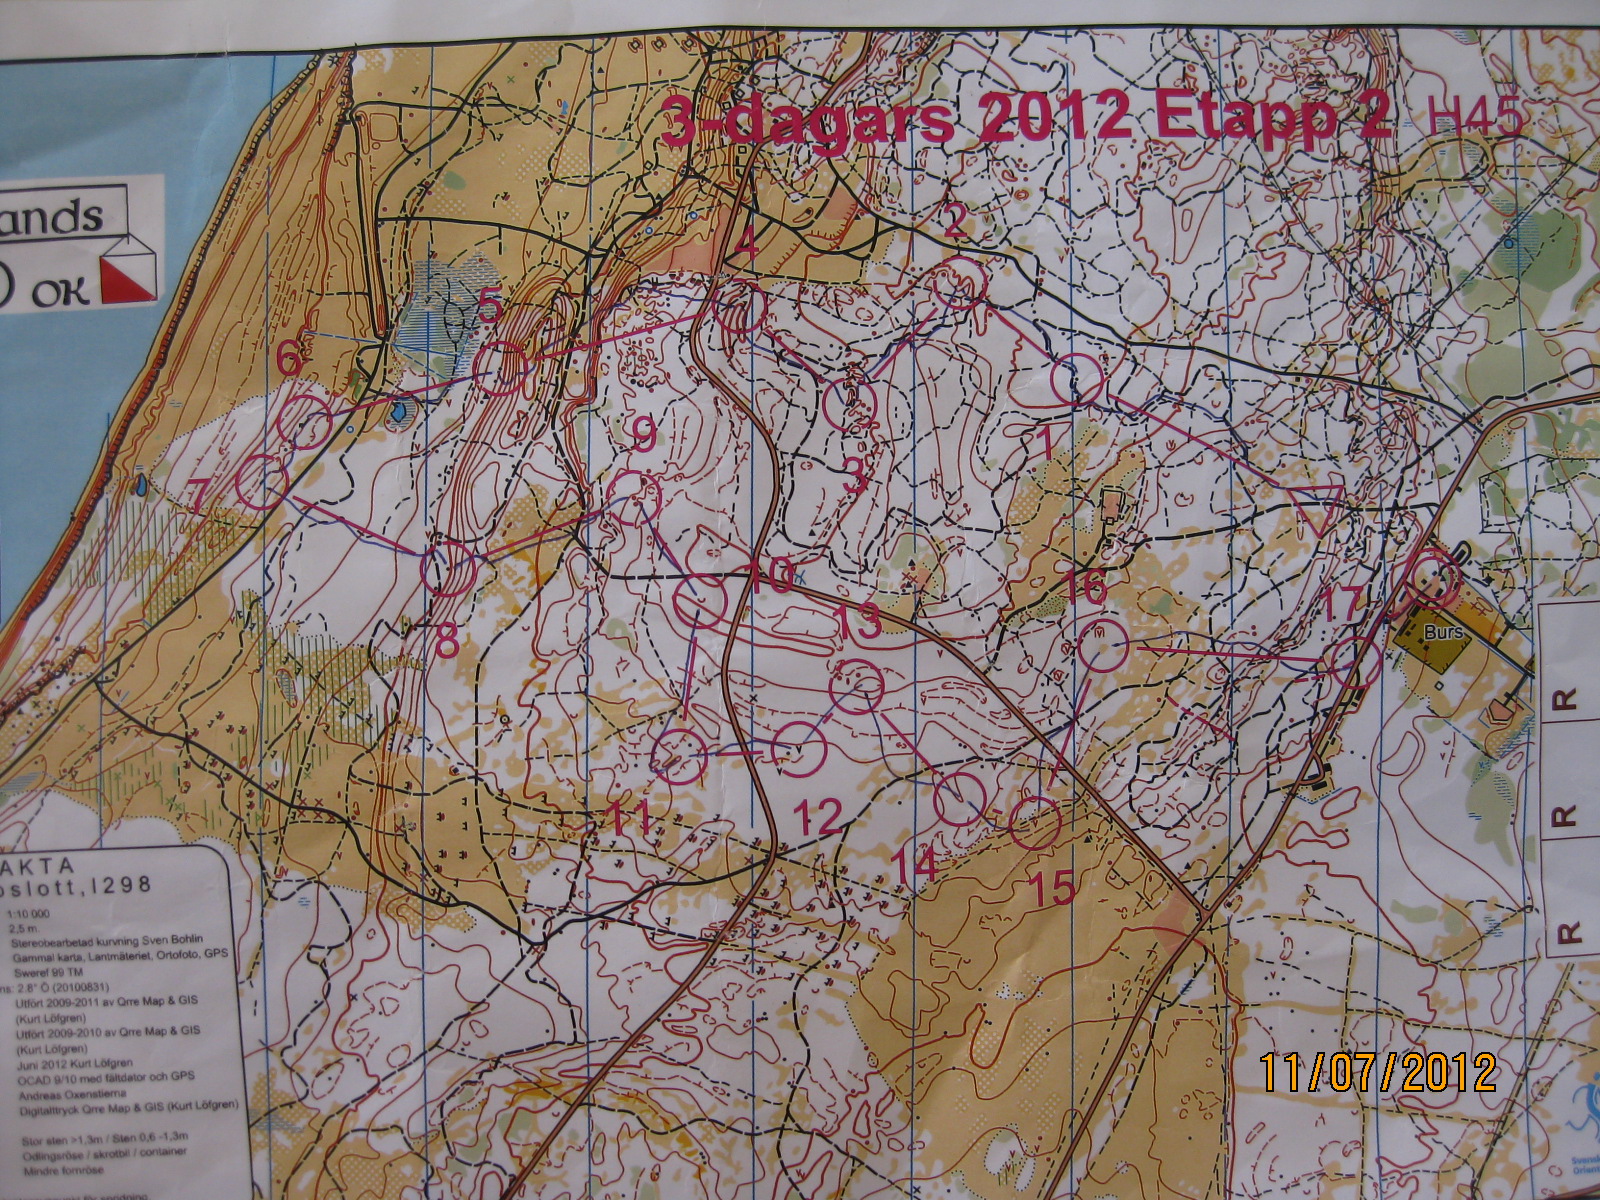 3-dagars Gotland etapp 2 (2012-07-11)